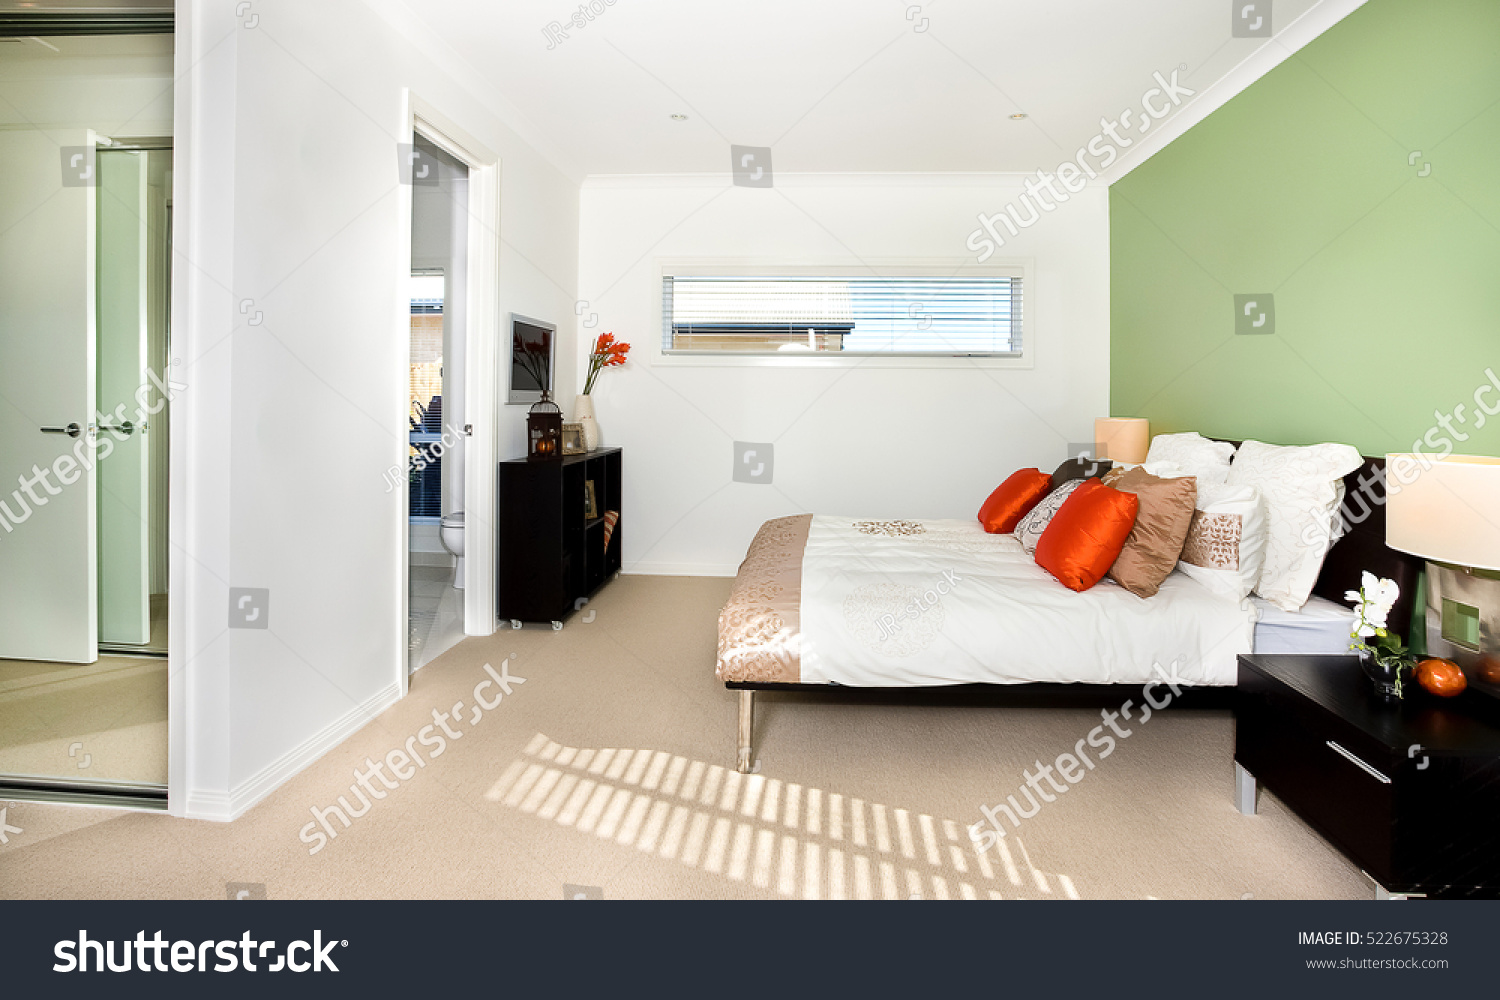 Simple Bedroom Design Belongs Luxury House Stockfoto Jetzt ...